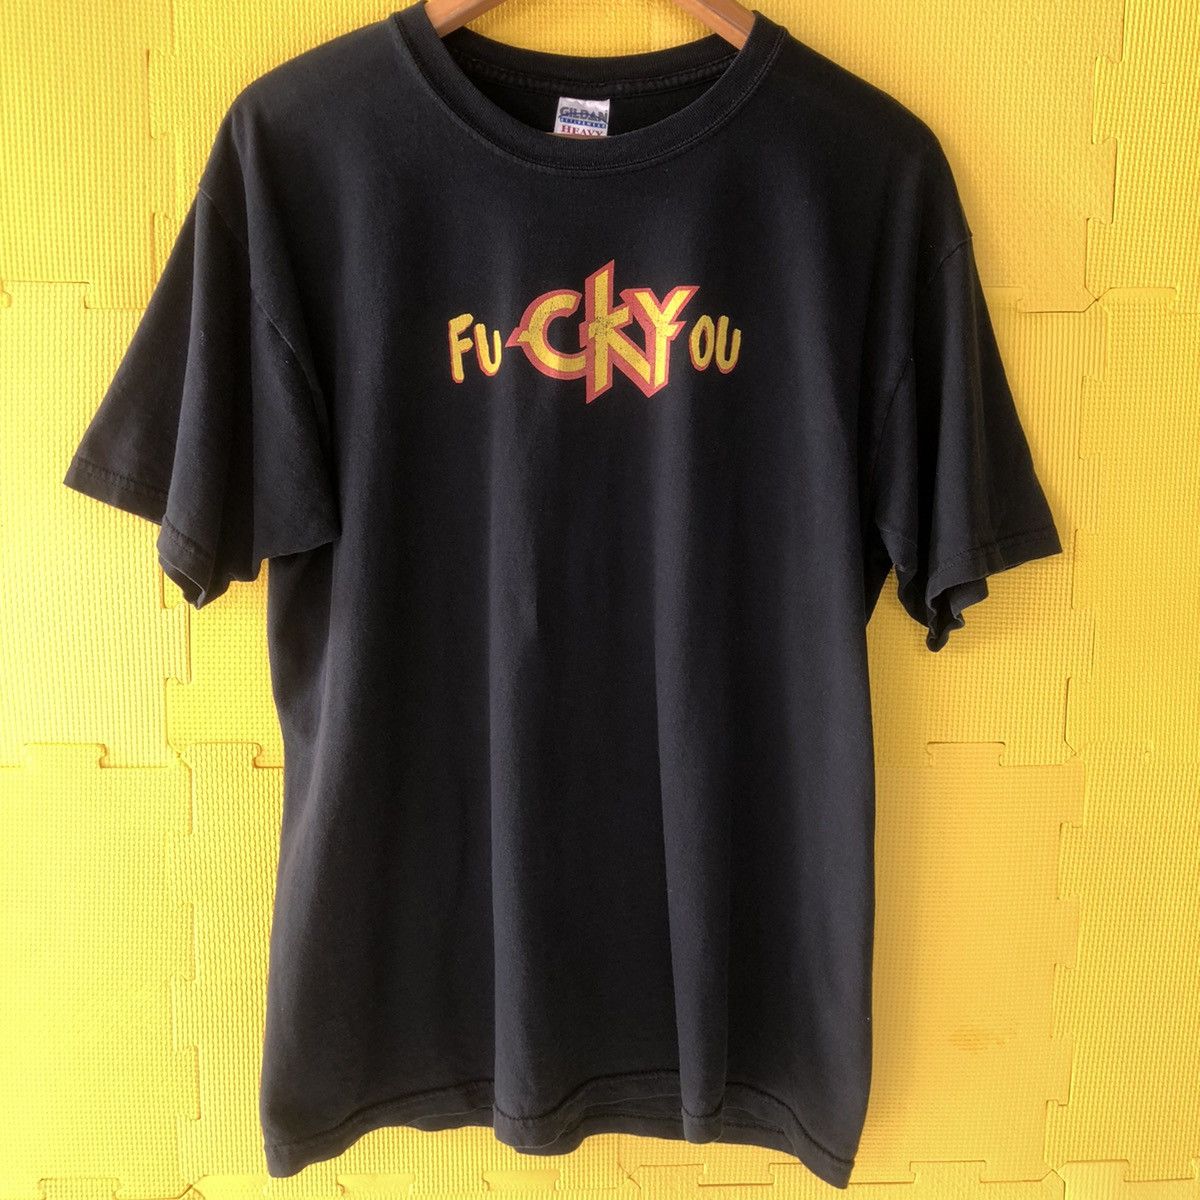 Vintage Vintage fu CKY ou band t shirt | Grailed